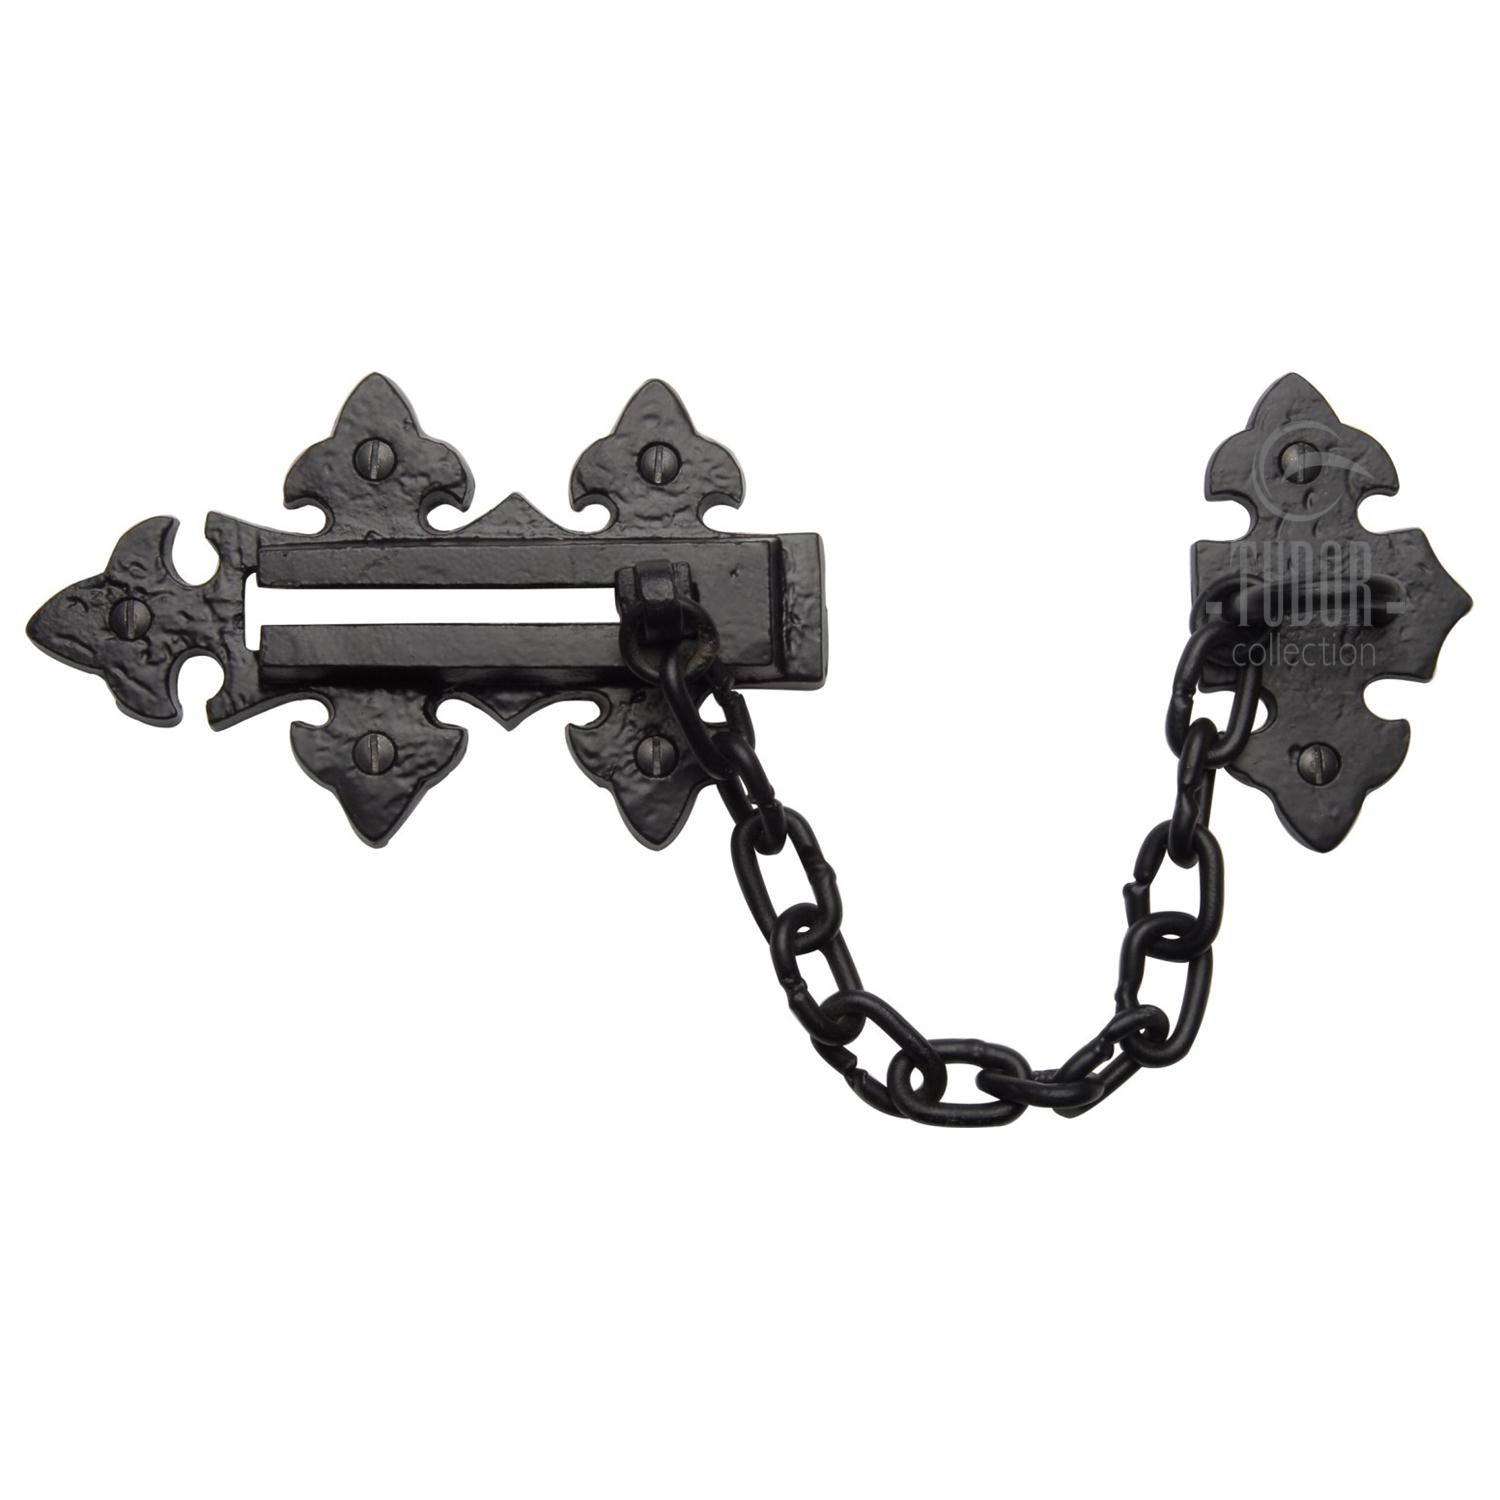 The Tudor Door Chain Black Iron